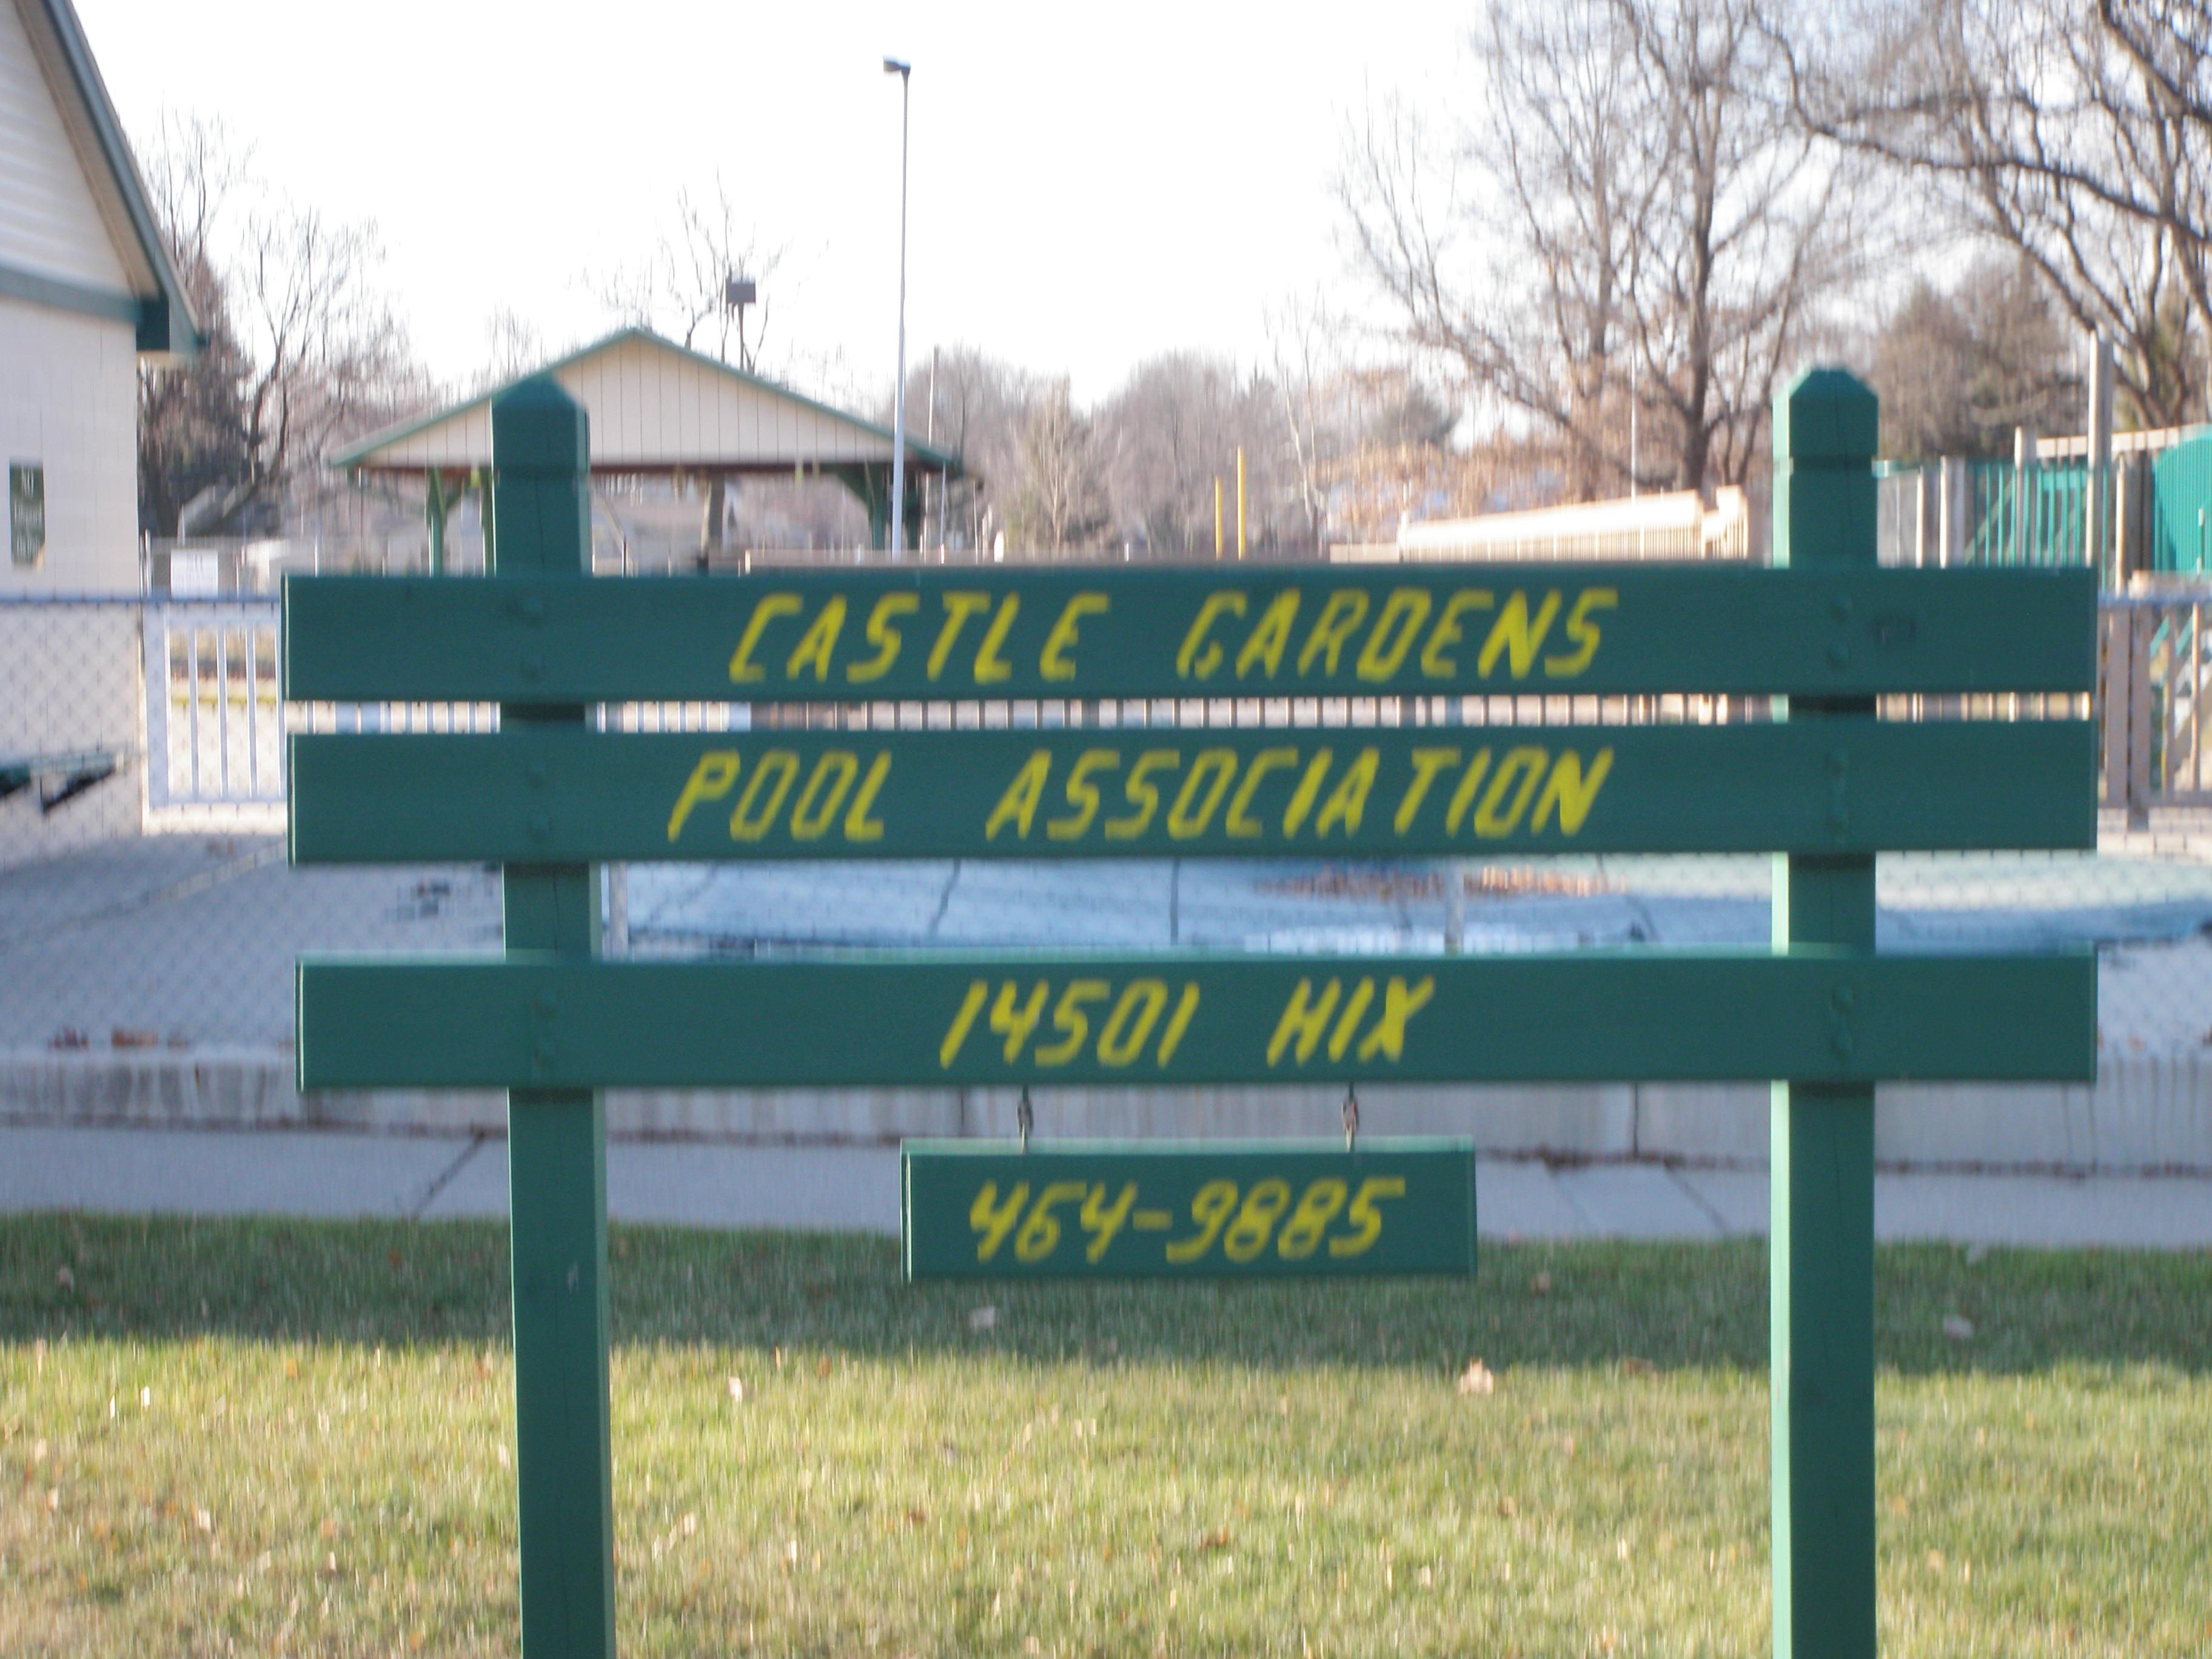 Castle Gardens Pool Association Livonia Michigan